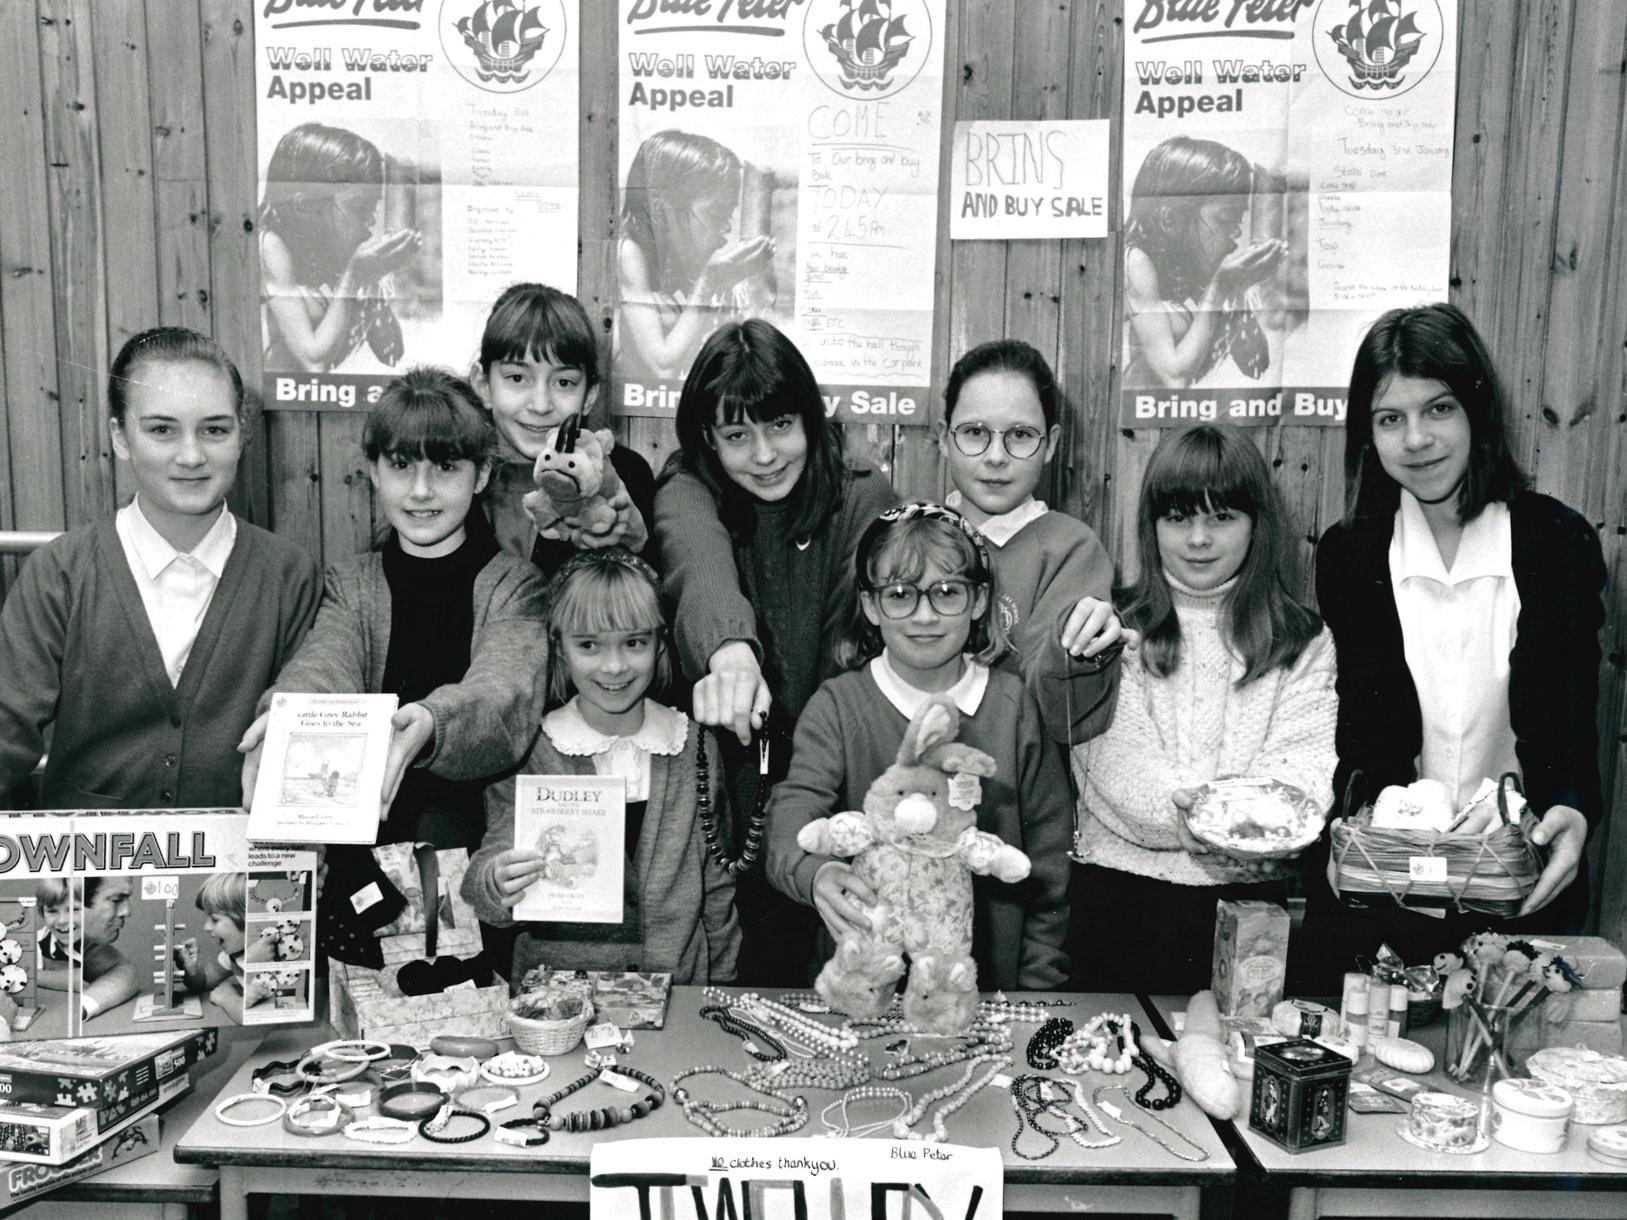 Kirkhamgate Junior School fund raiser for the Blue Peter appeal, 1995.